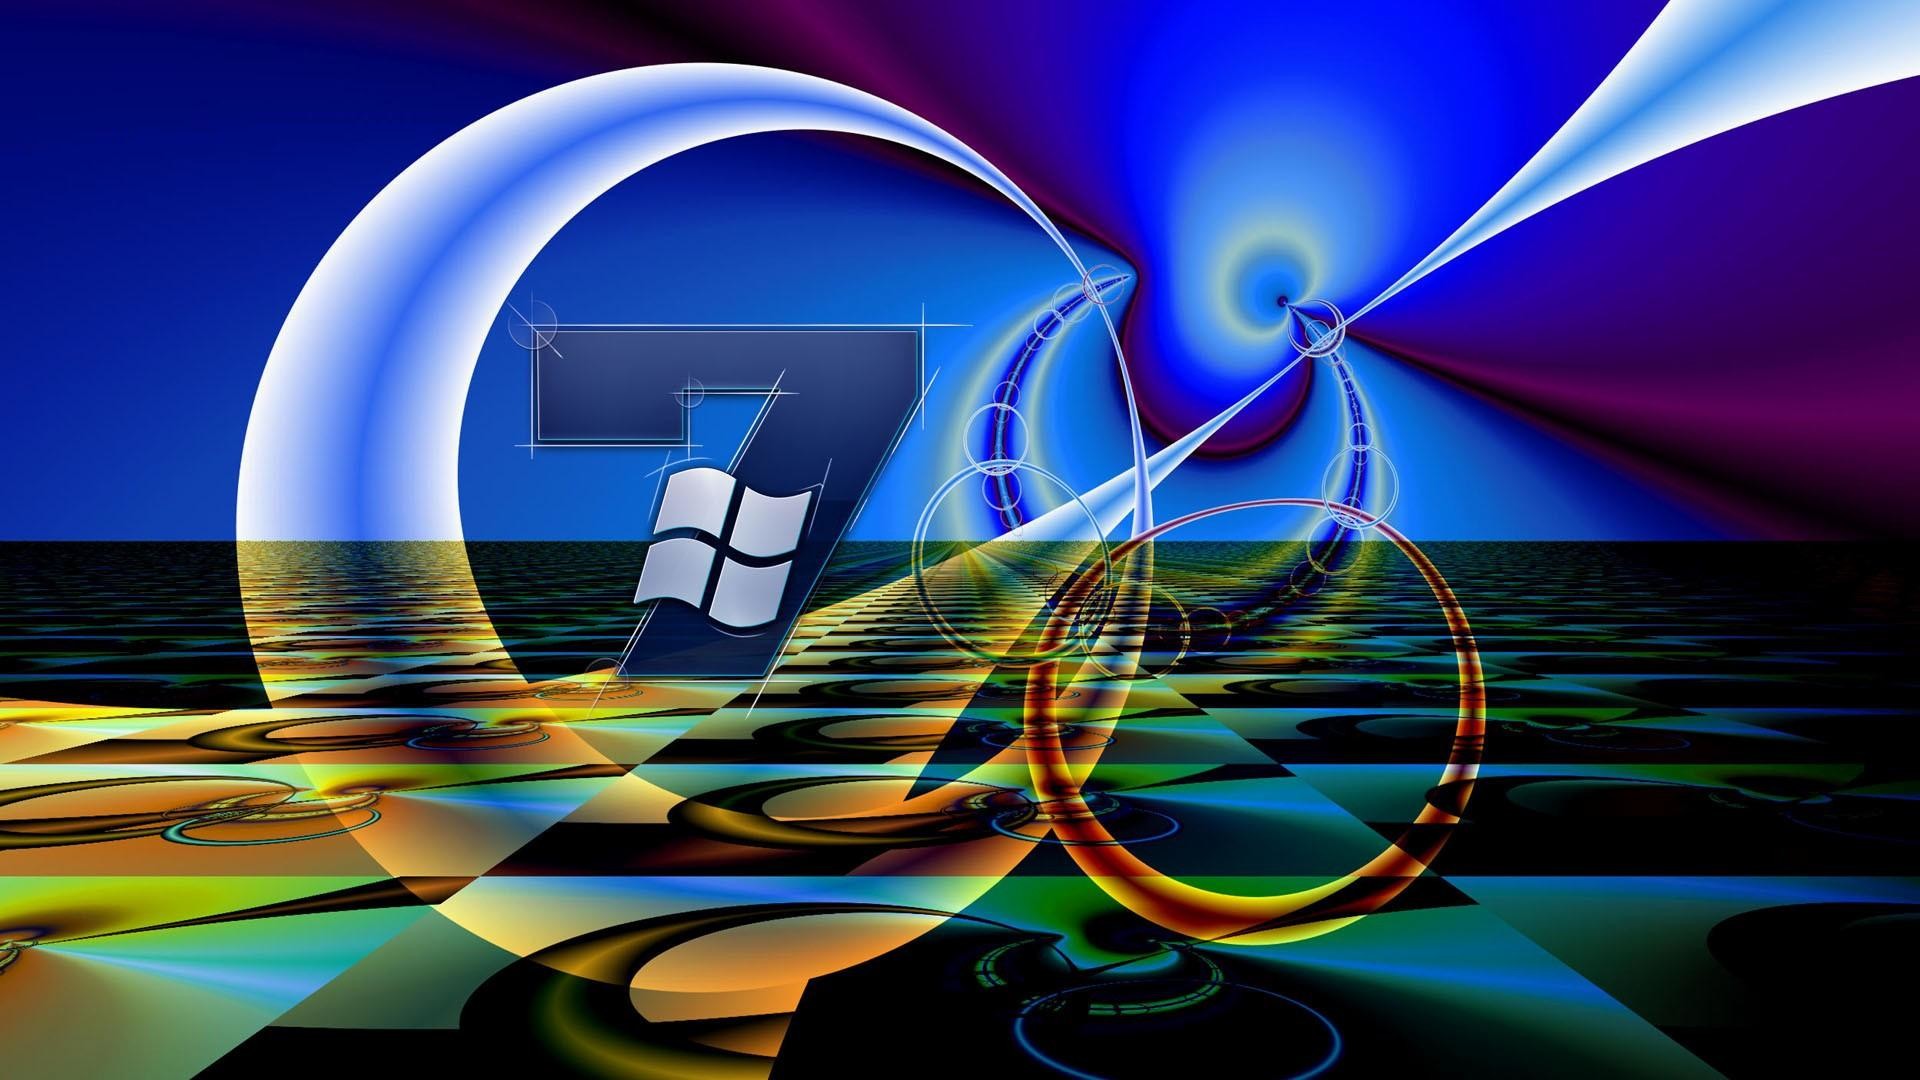 Windows 7 wallpaper themes hd